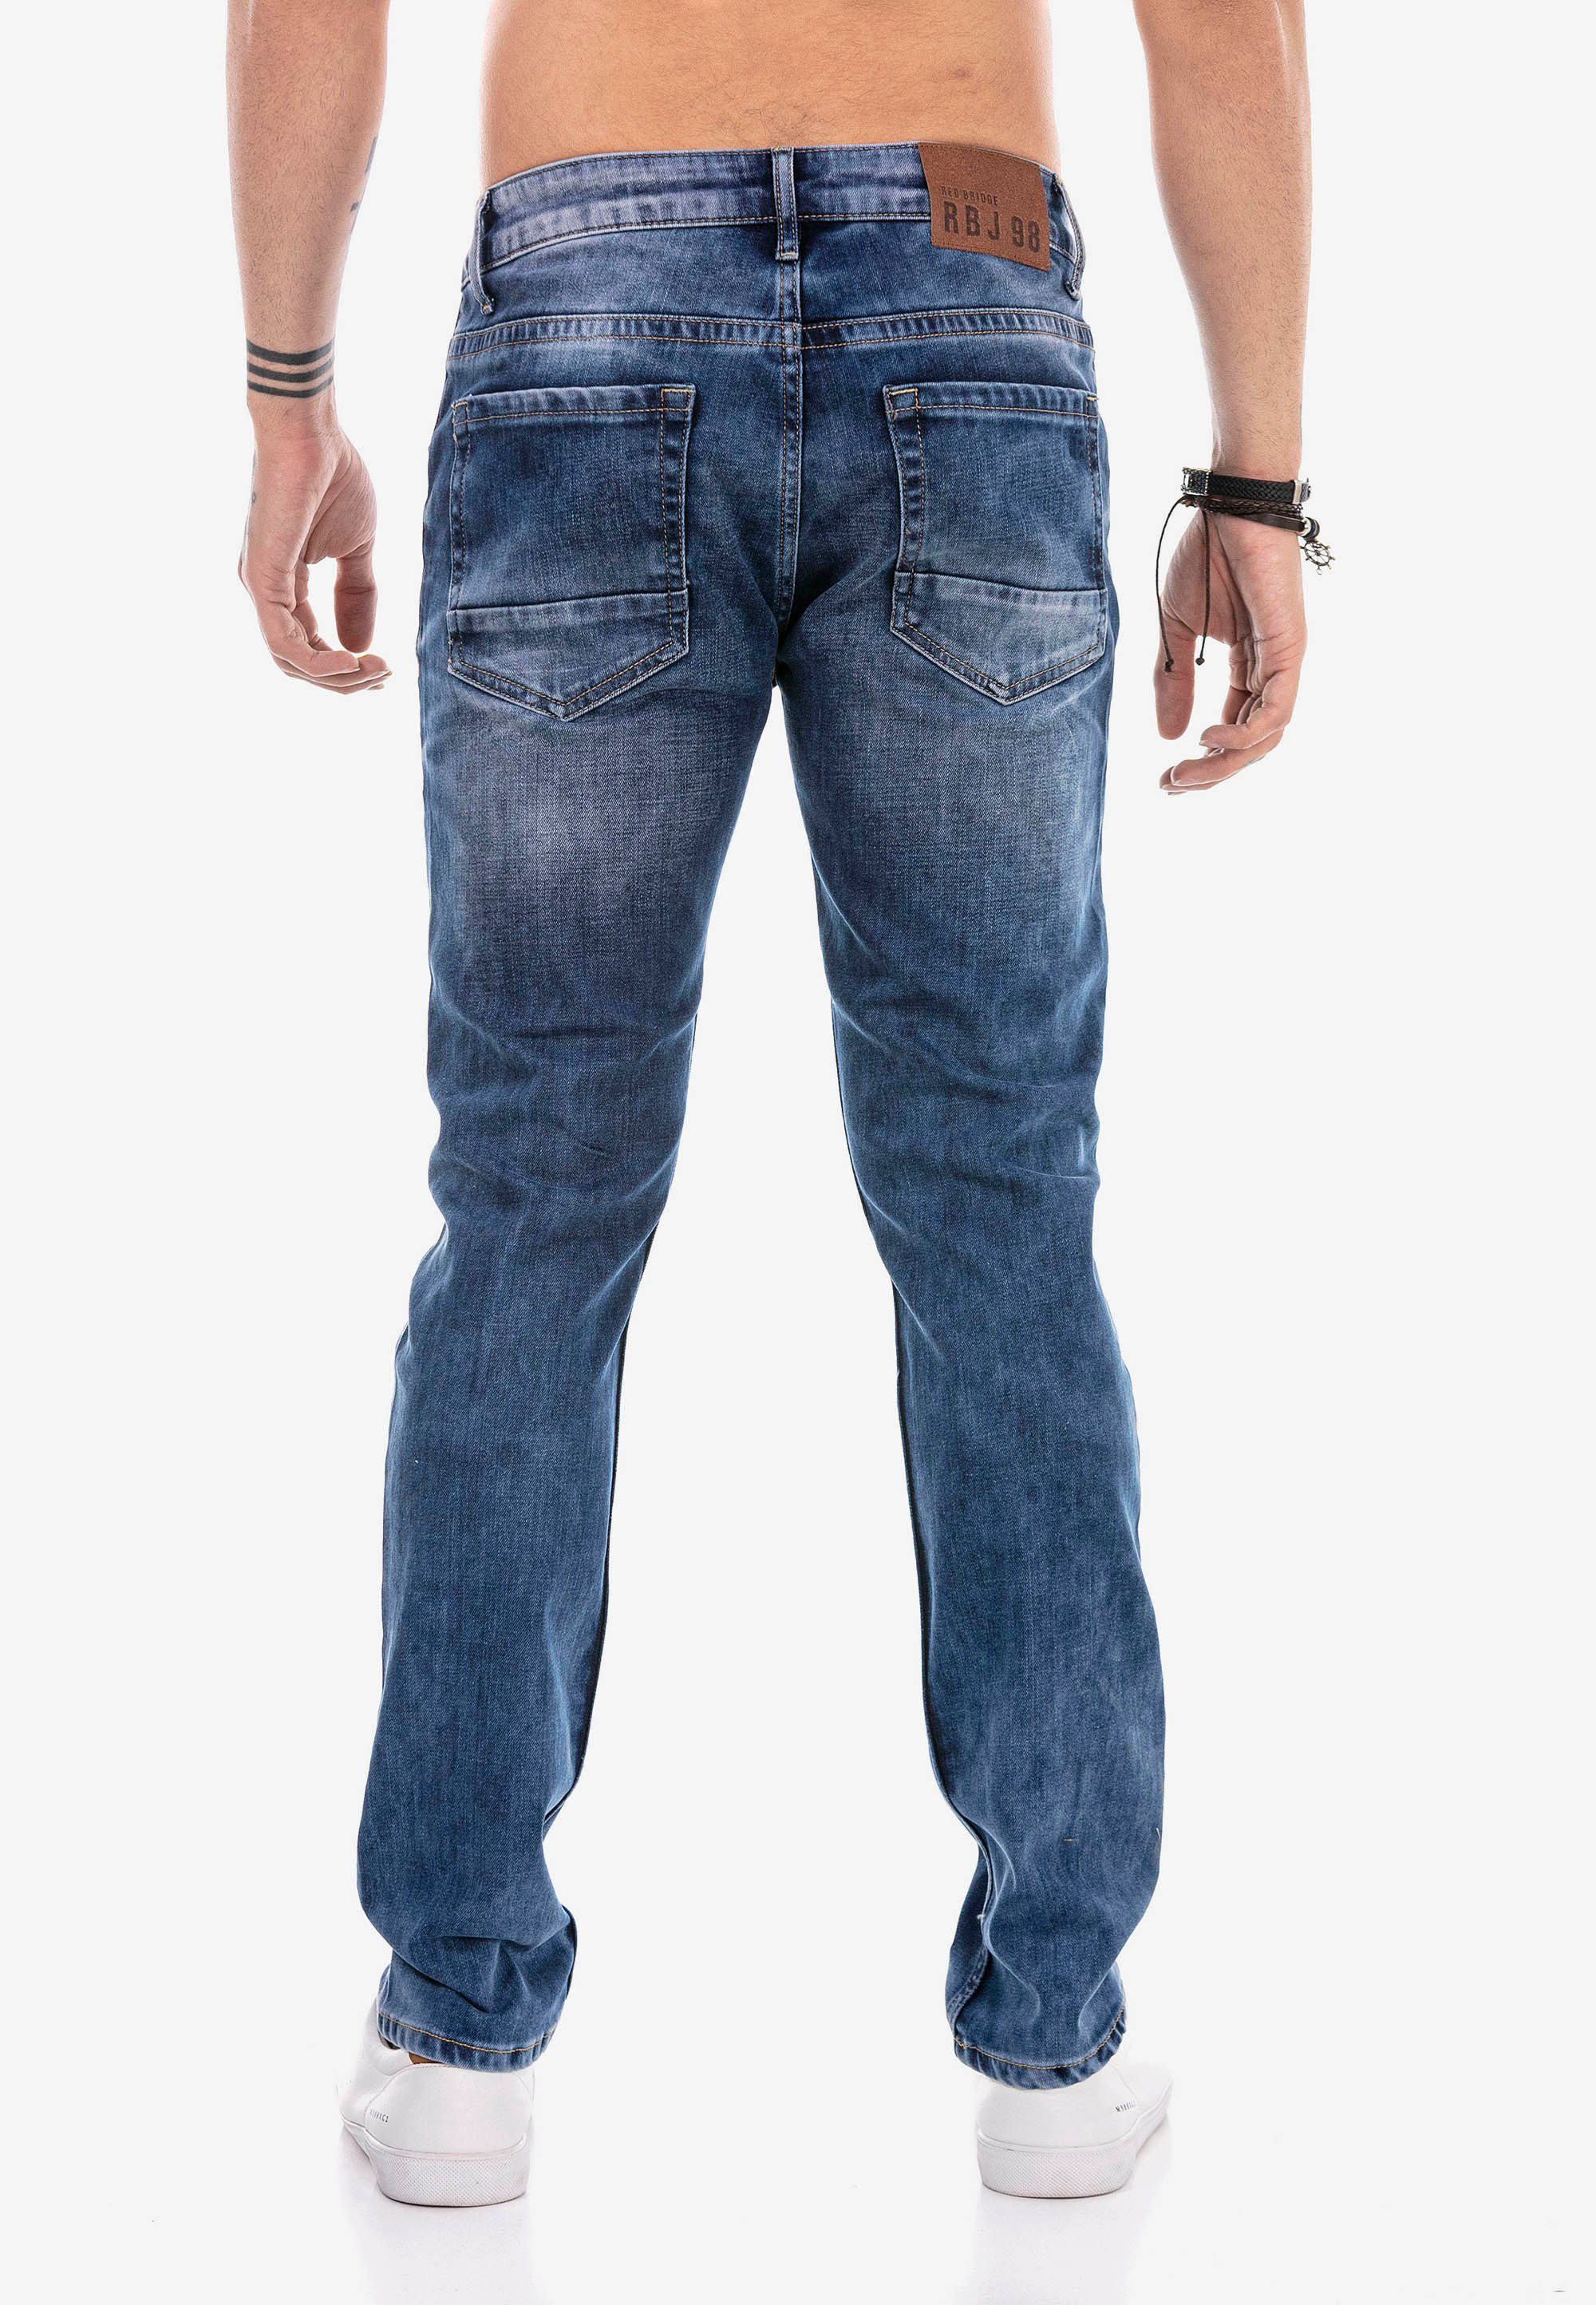 Destroyed-Elementen Bequeme Farnborough RedBridge coolen mit Jeans